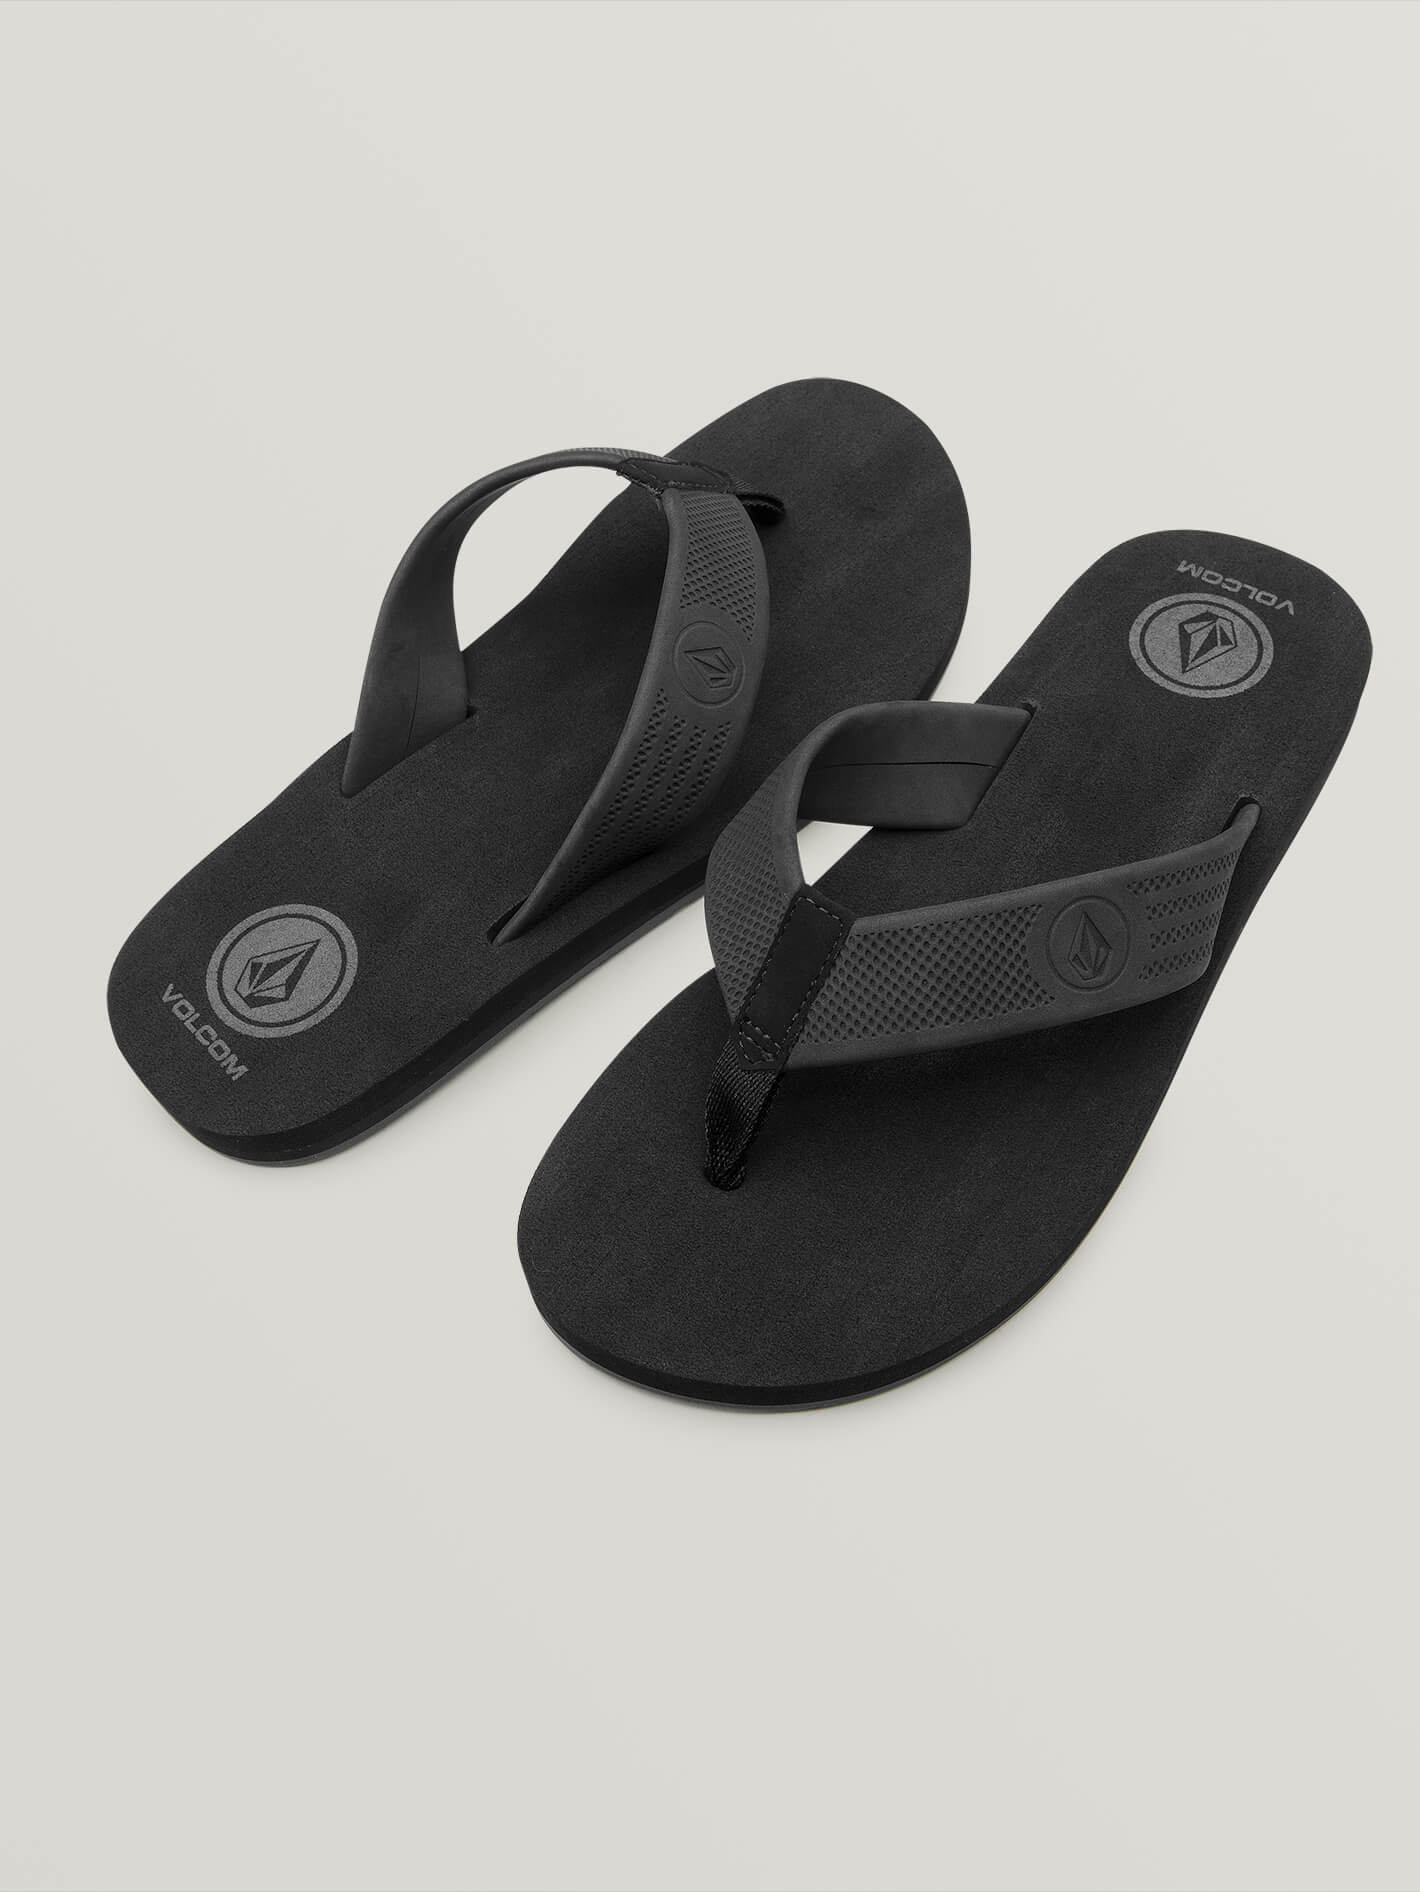 volcom black sandals